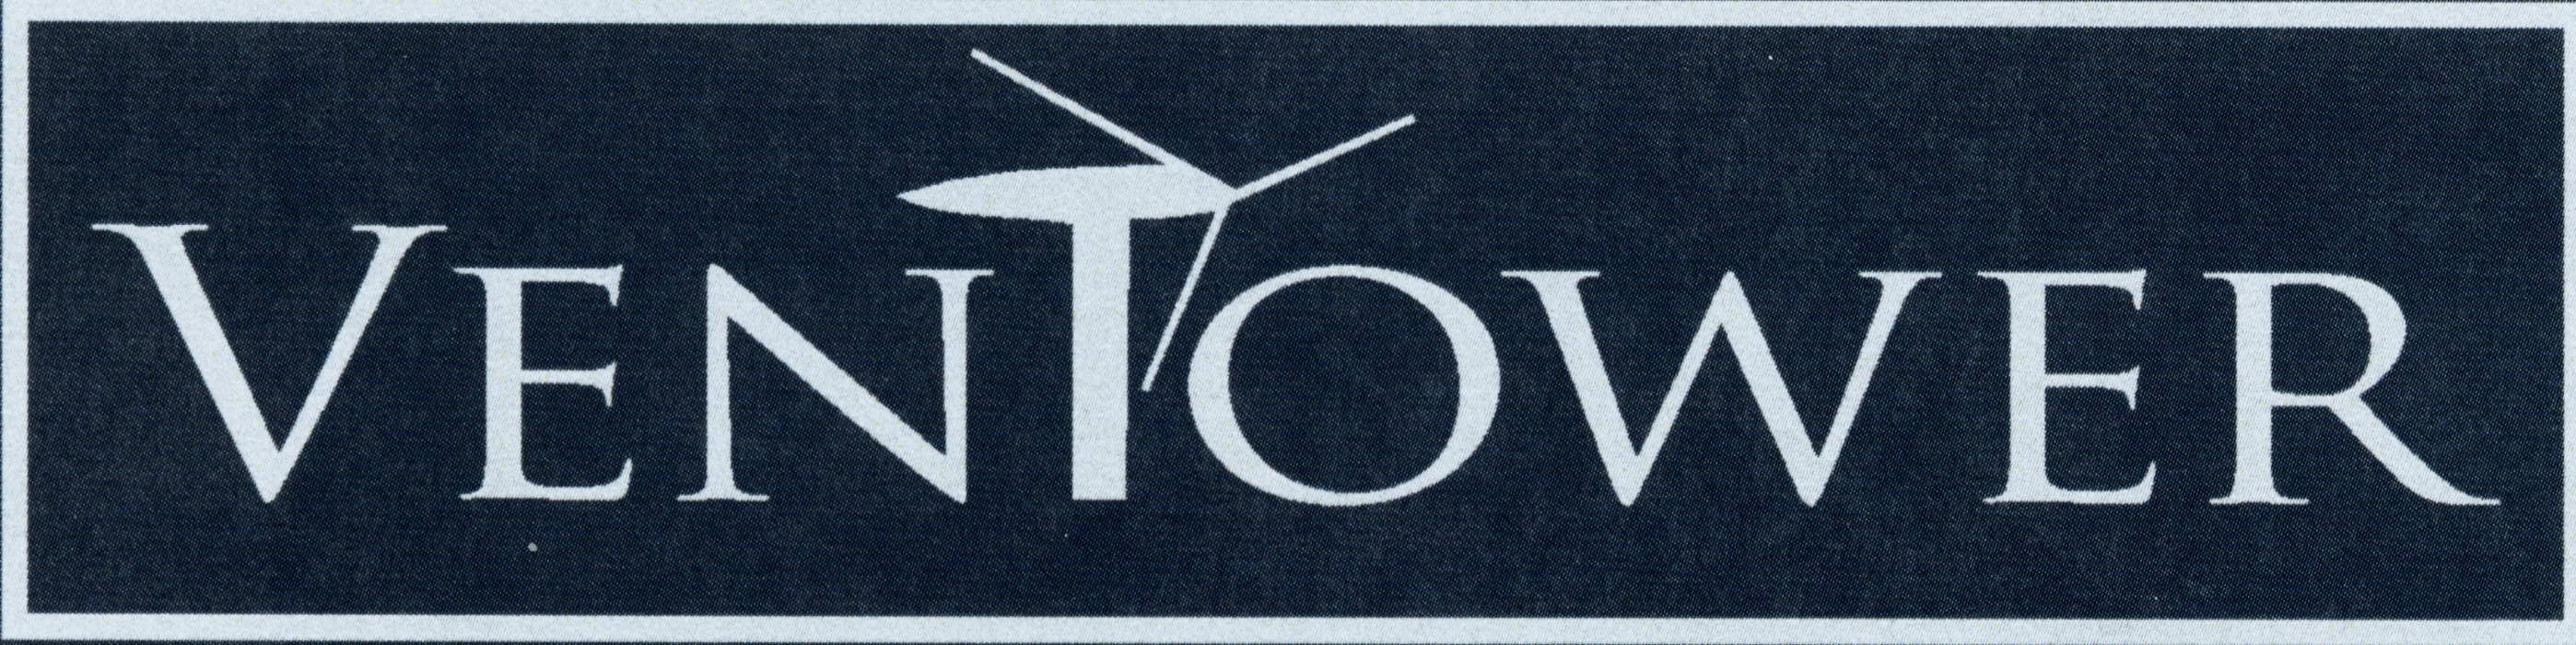 Vent Tower Logo